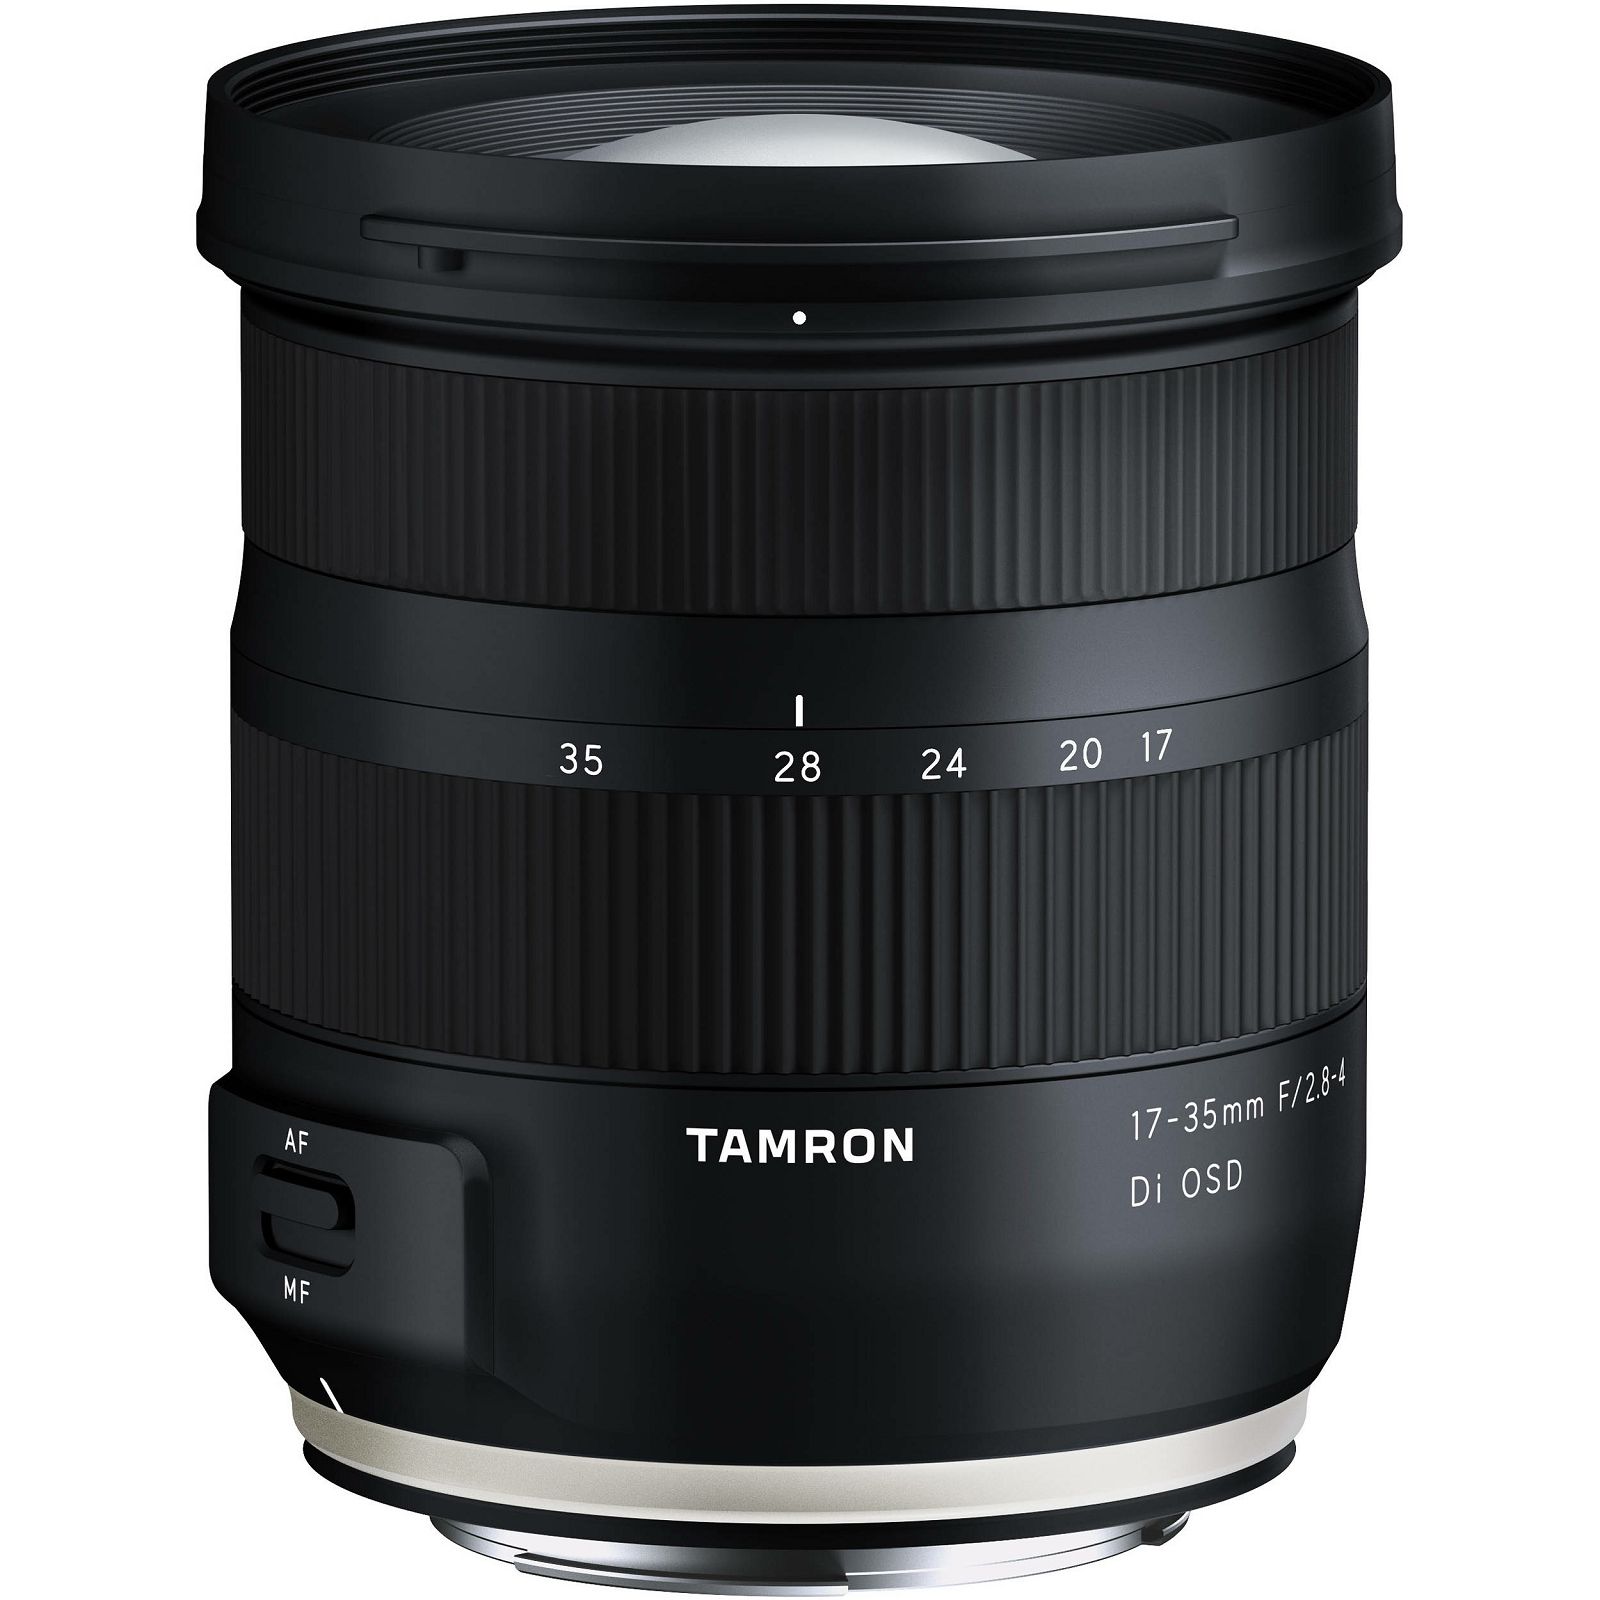 Tamron AF 17-35mm f/2.8-4 Di OSD širokokutni objektiv za Canon EF (A037E)